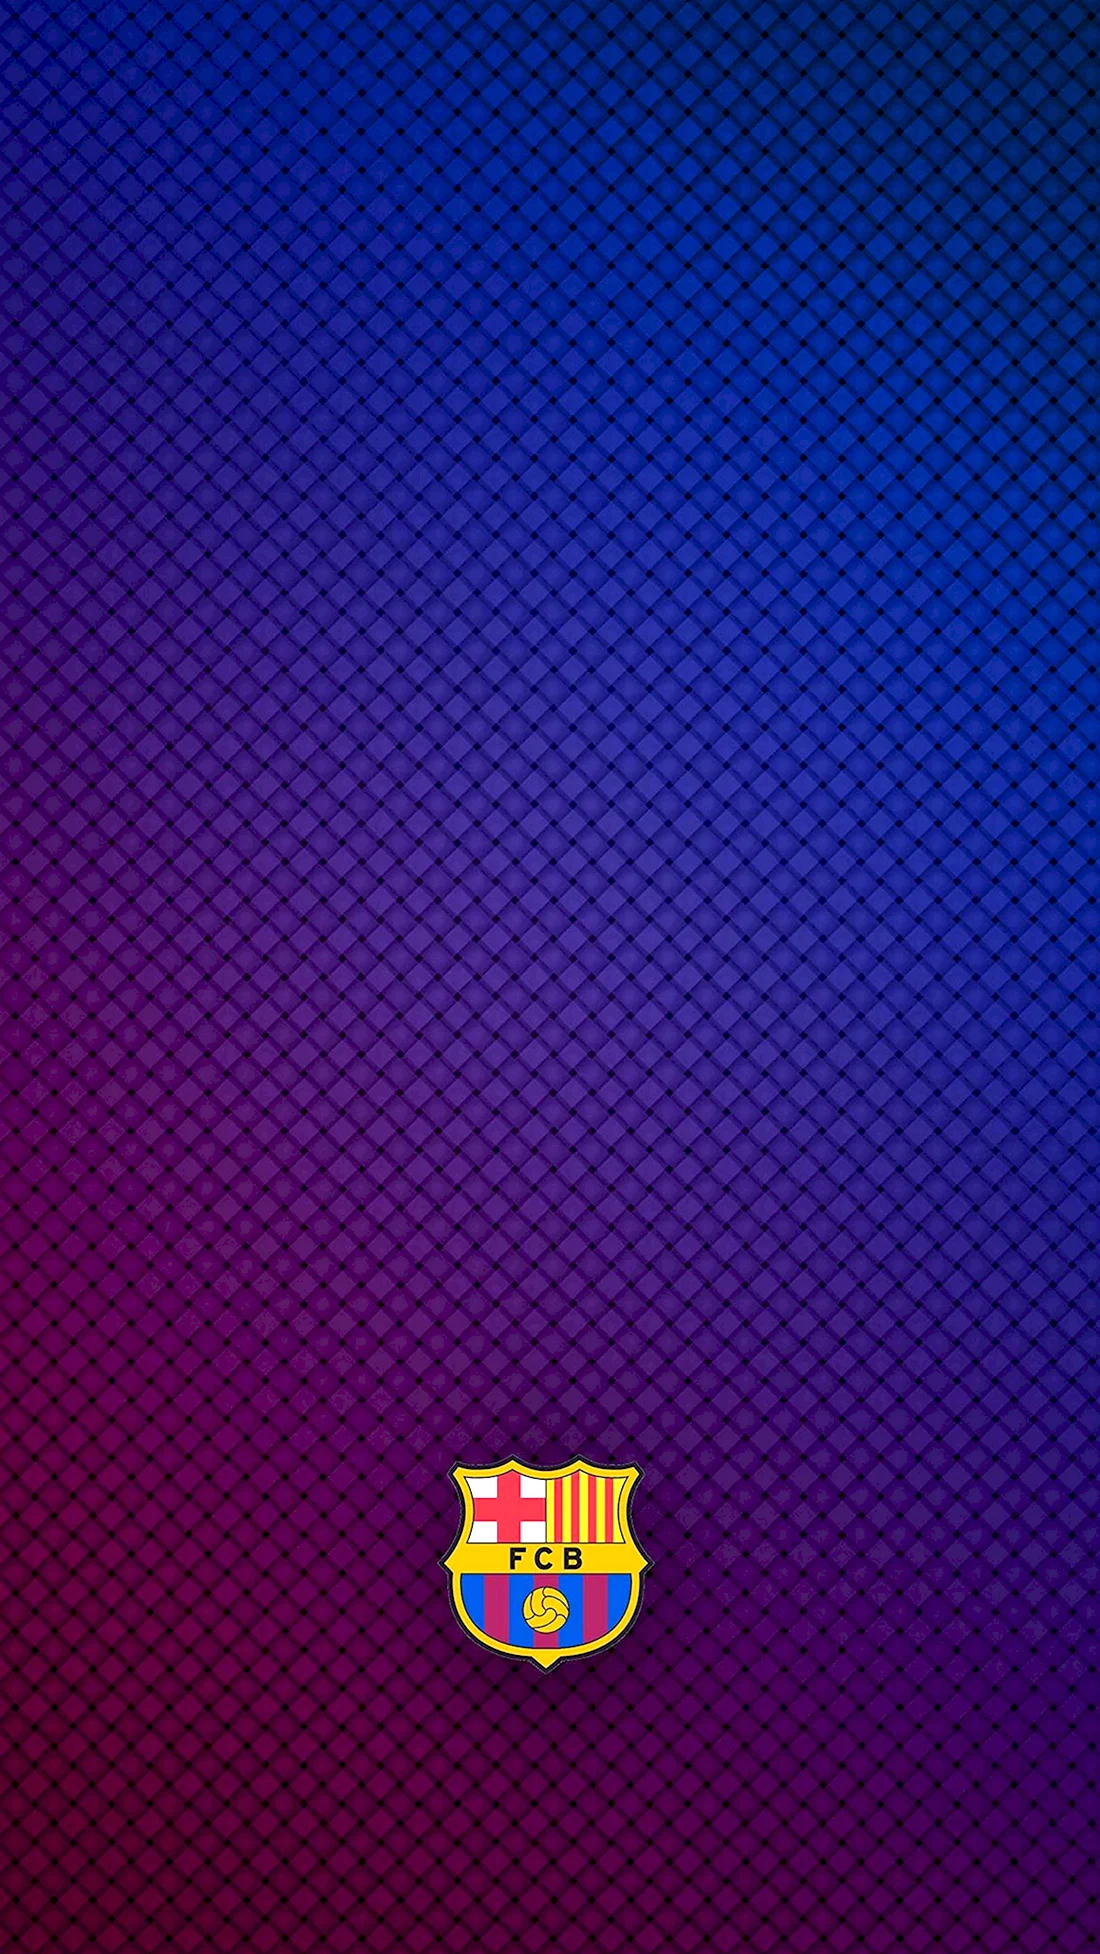 FC Barcelona 2021